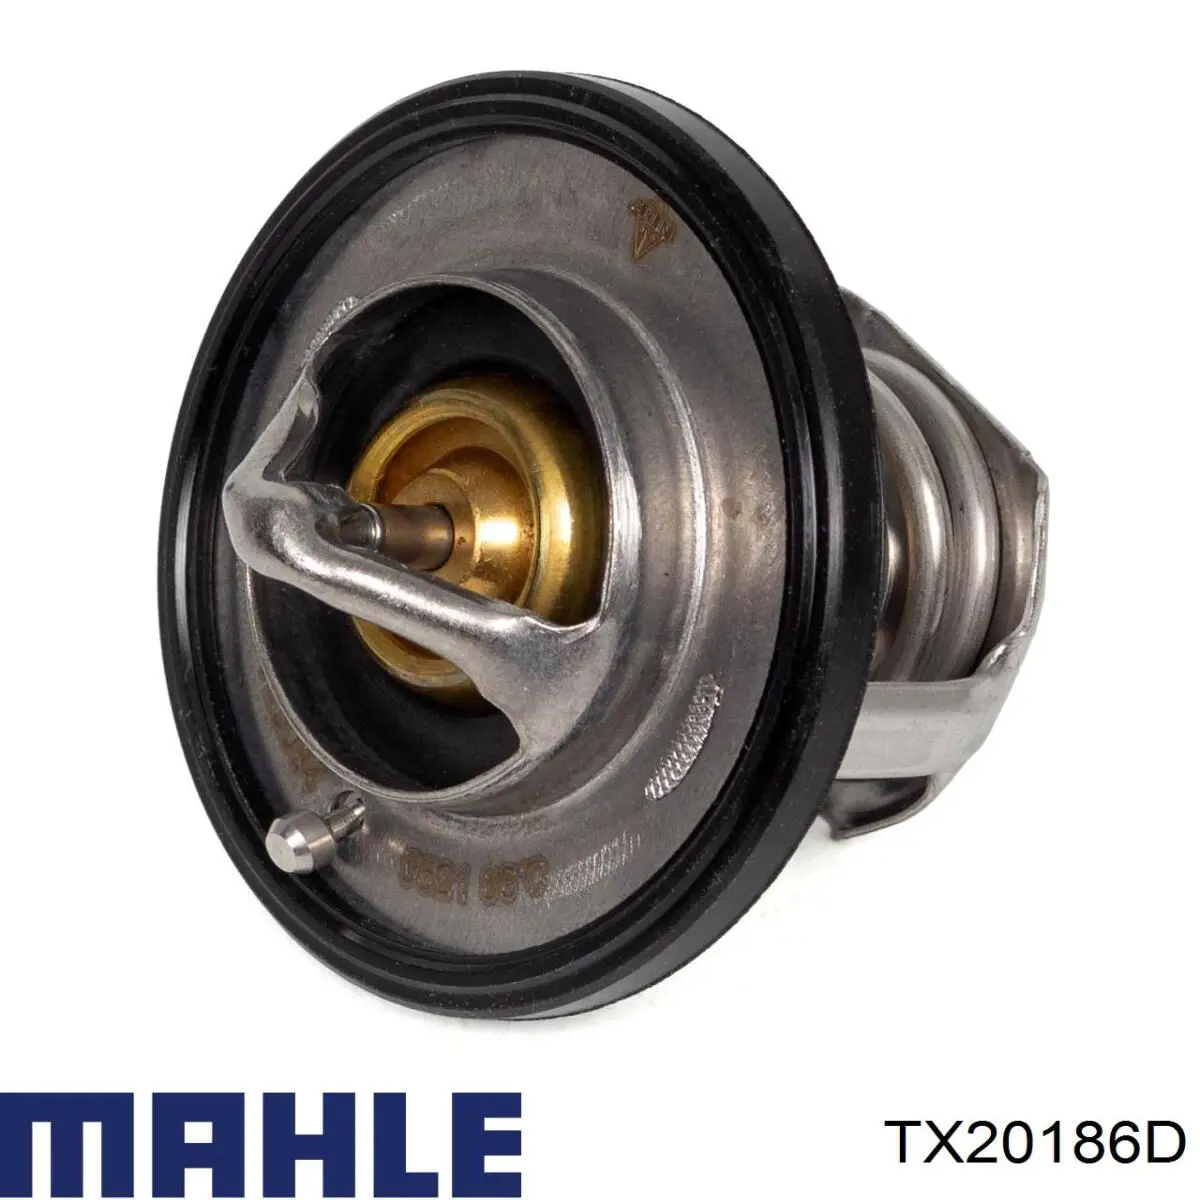 TE0120 Magneti Marelli termostato